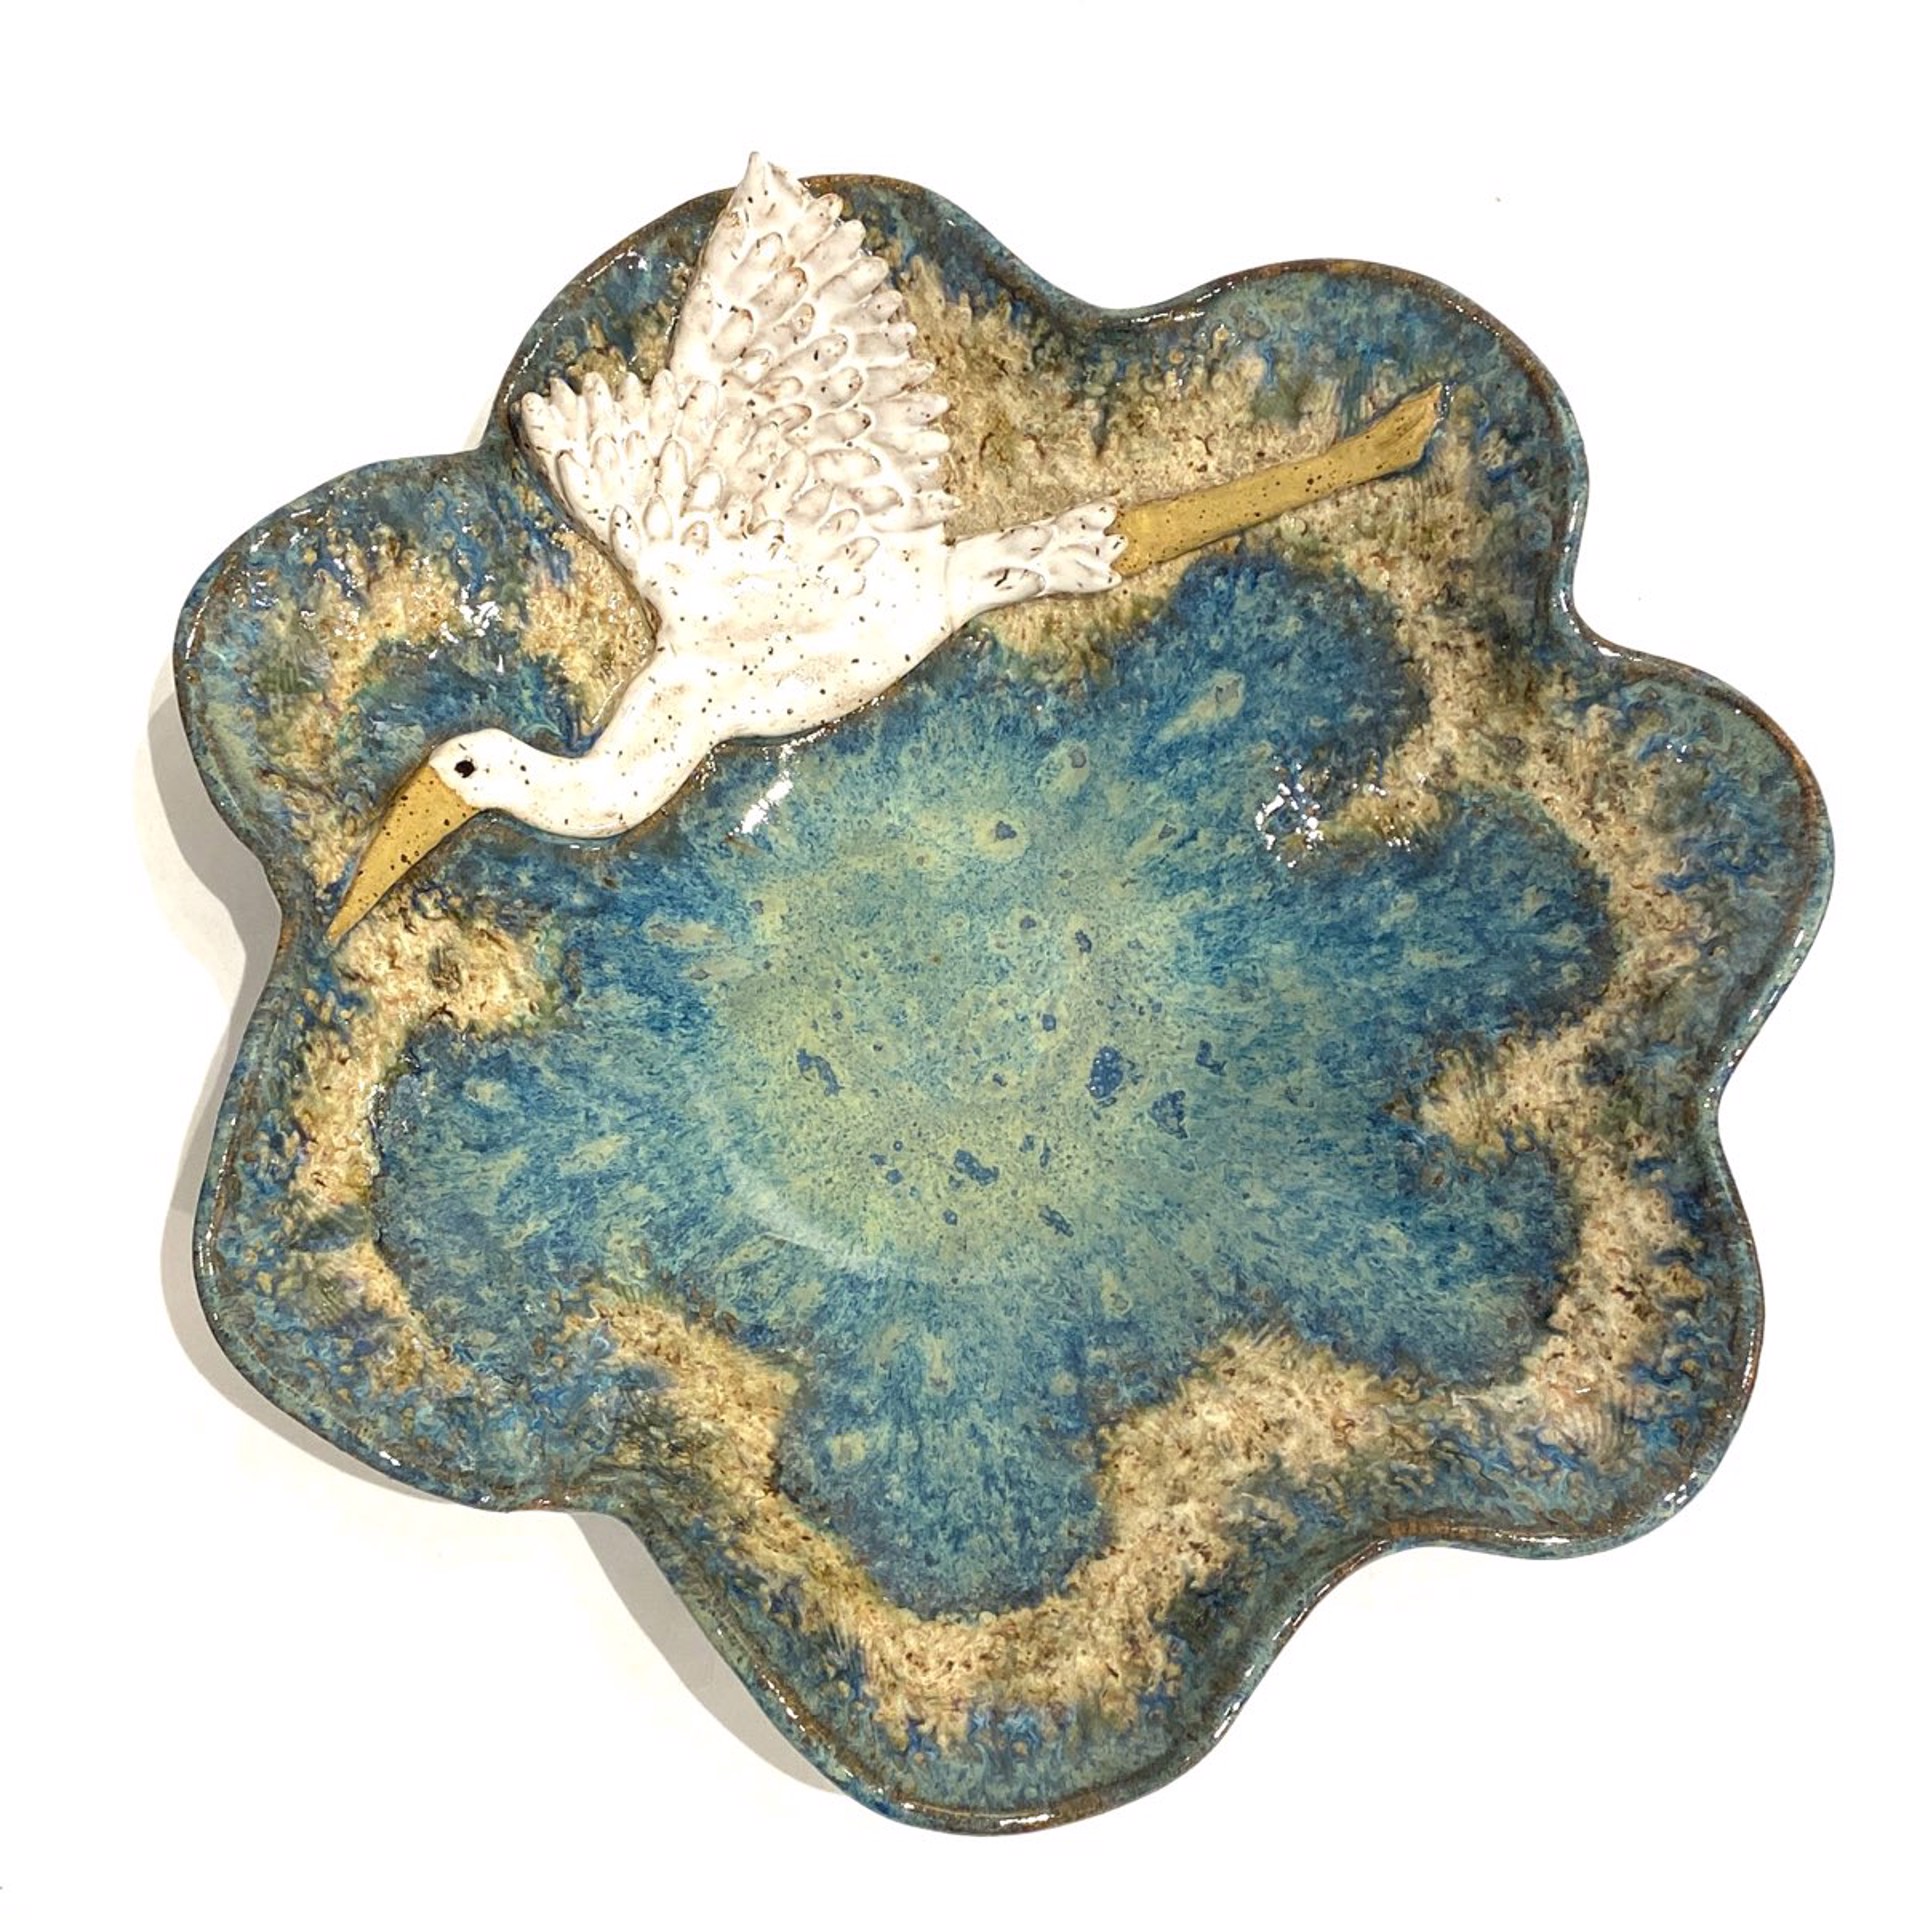 LG23-994  Large Round Scalloped Bowl with Heron (Blue Glaze) by Jim & Steffi Logan